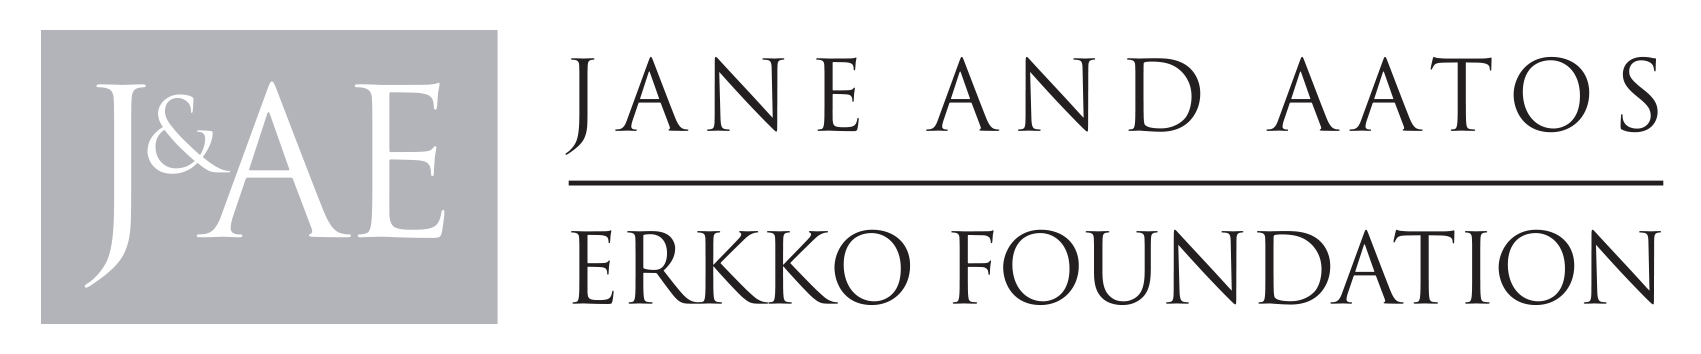 Text logo reading Jane and Aatos Erkko Foundation